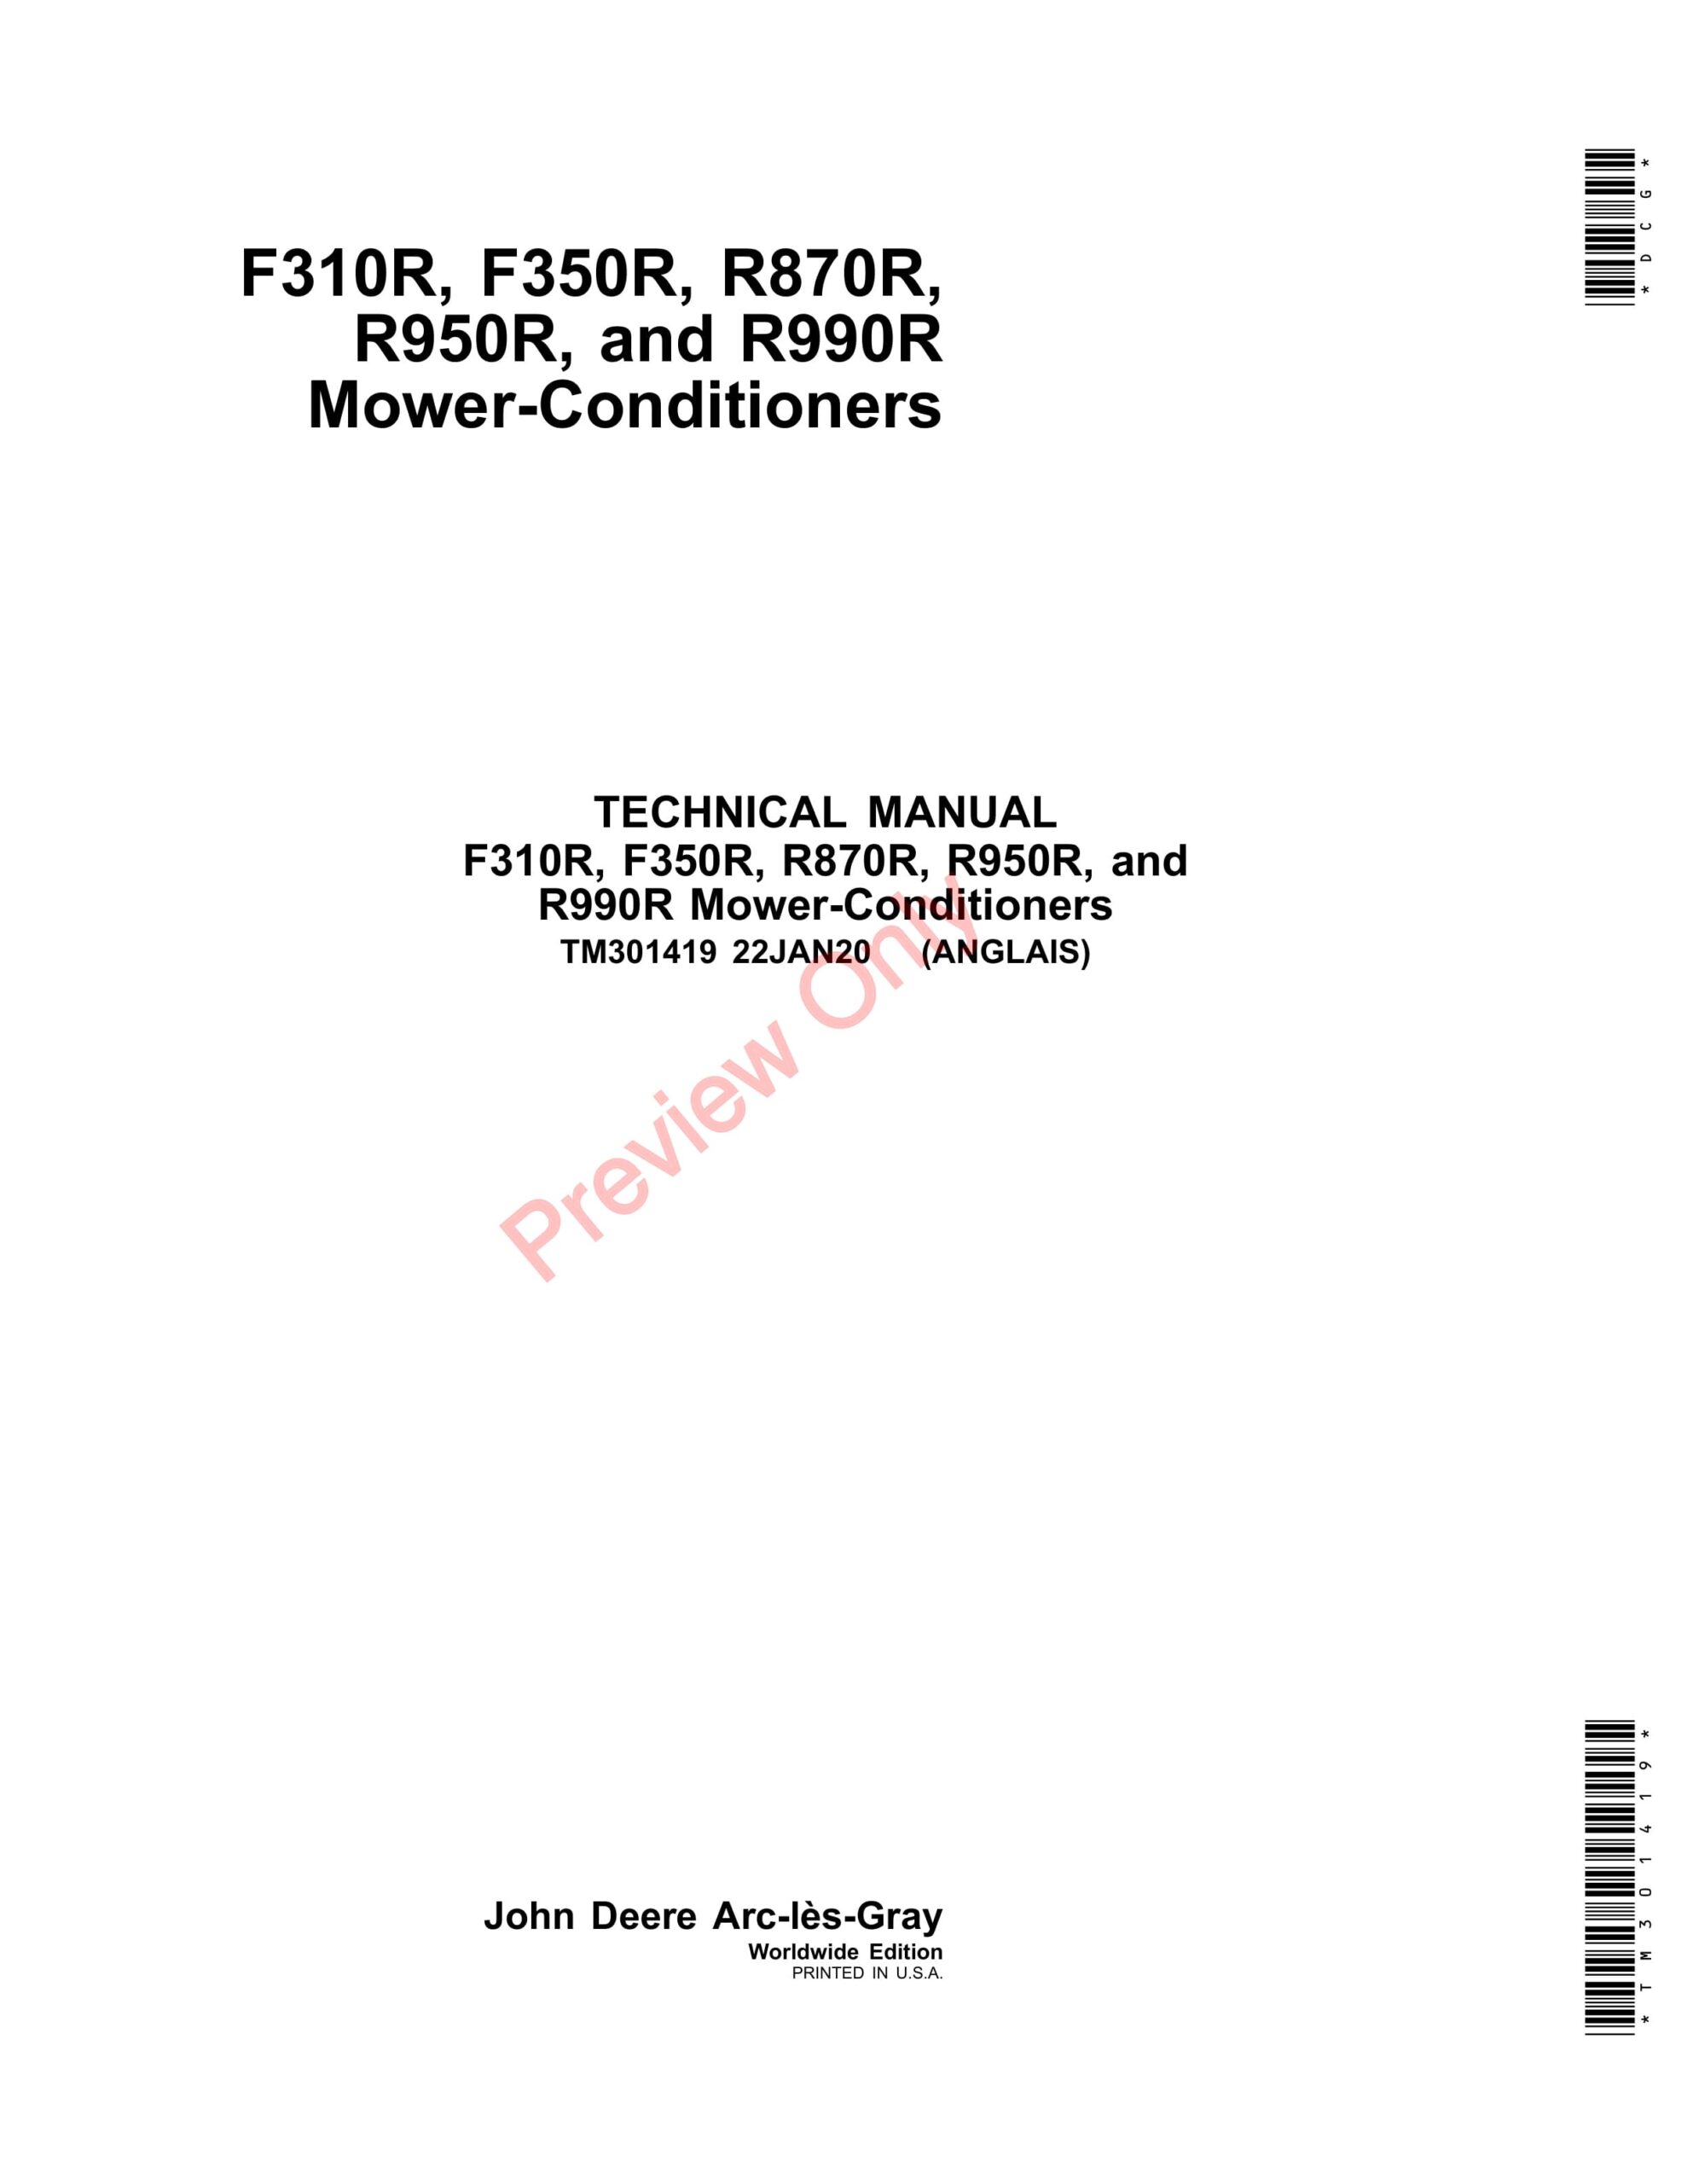 John Deere F310R, F350R, R870R, R950R, and R990R Mower-Conditioners Technical Manual TM301419 22JAN20-1